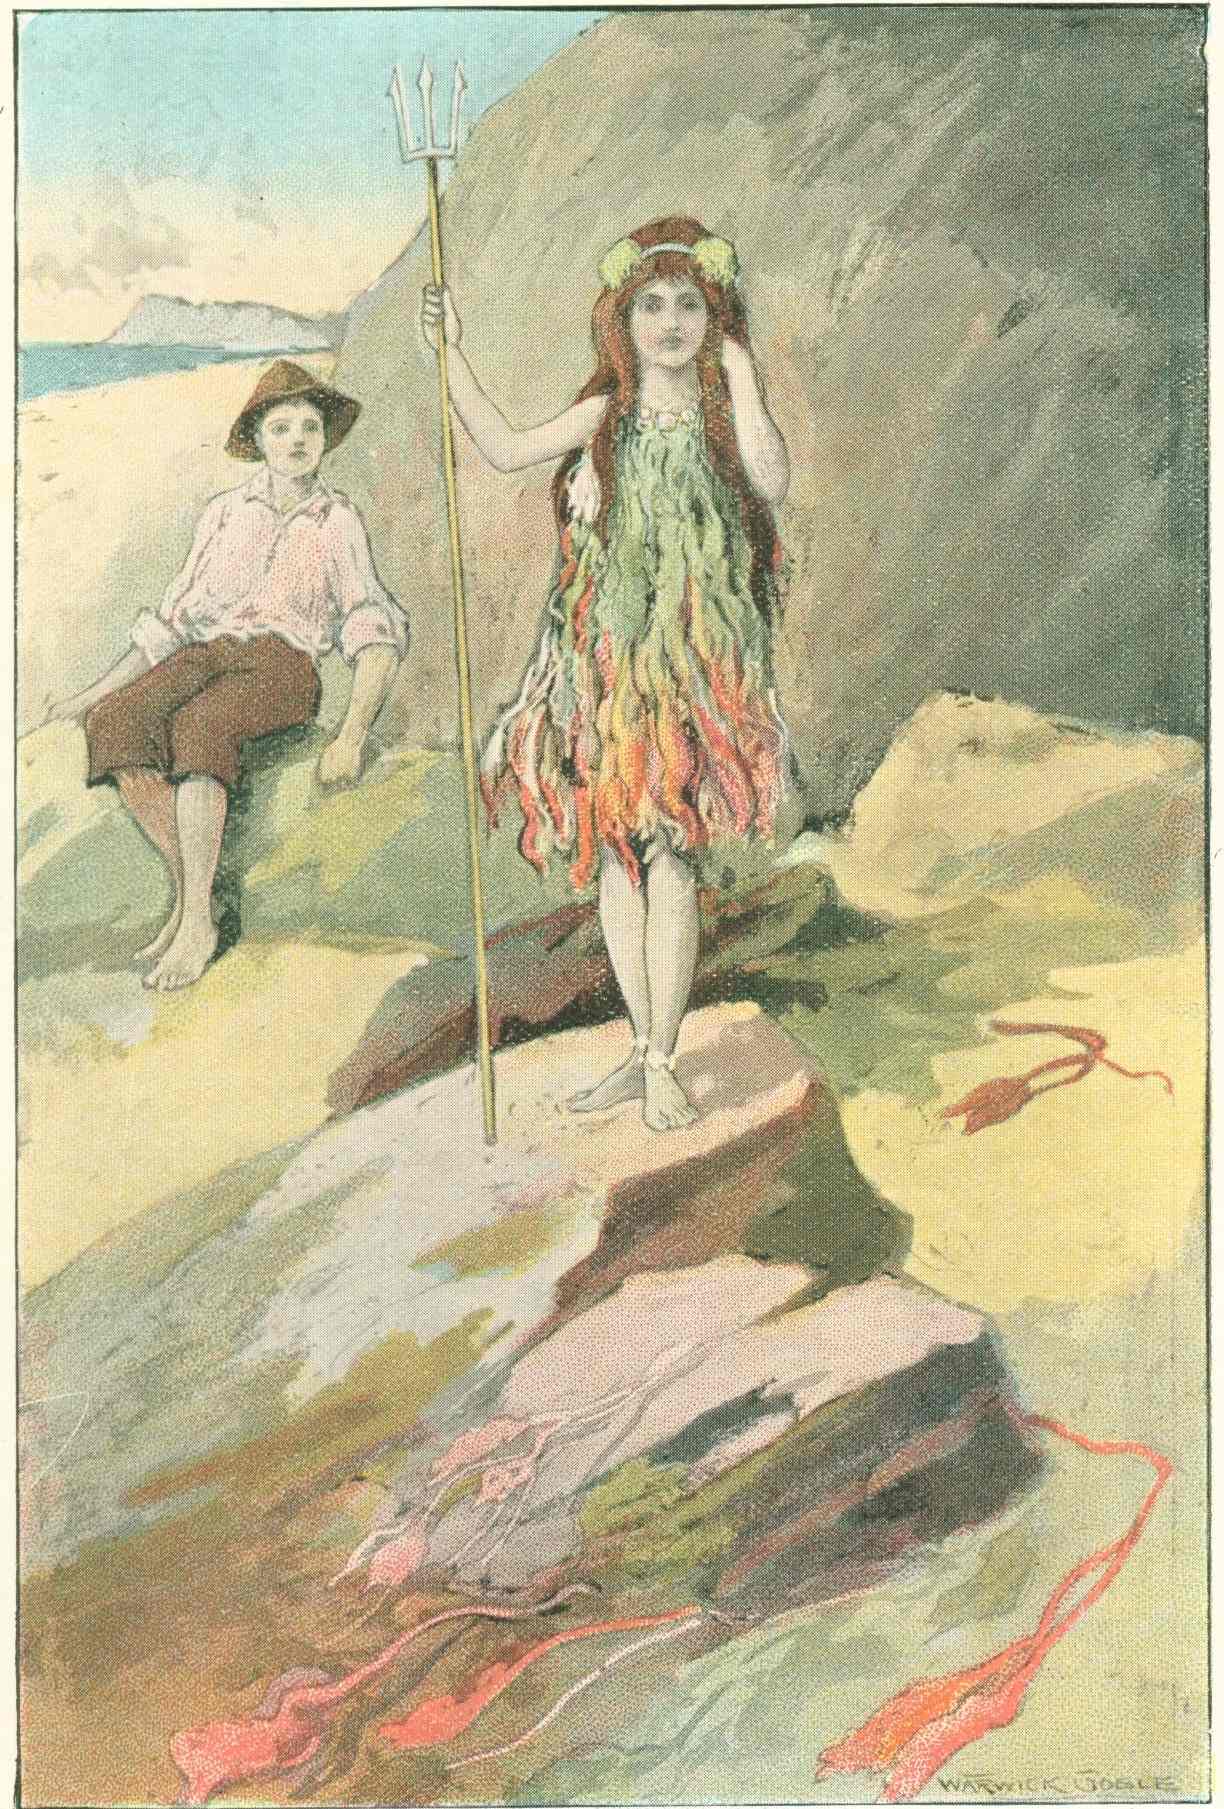 Nymph of the Forest Linocut Block Print Fairy-tale Art Art Print